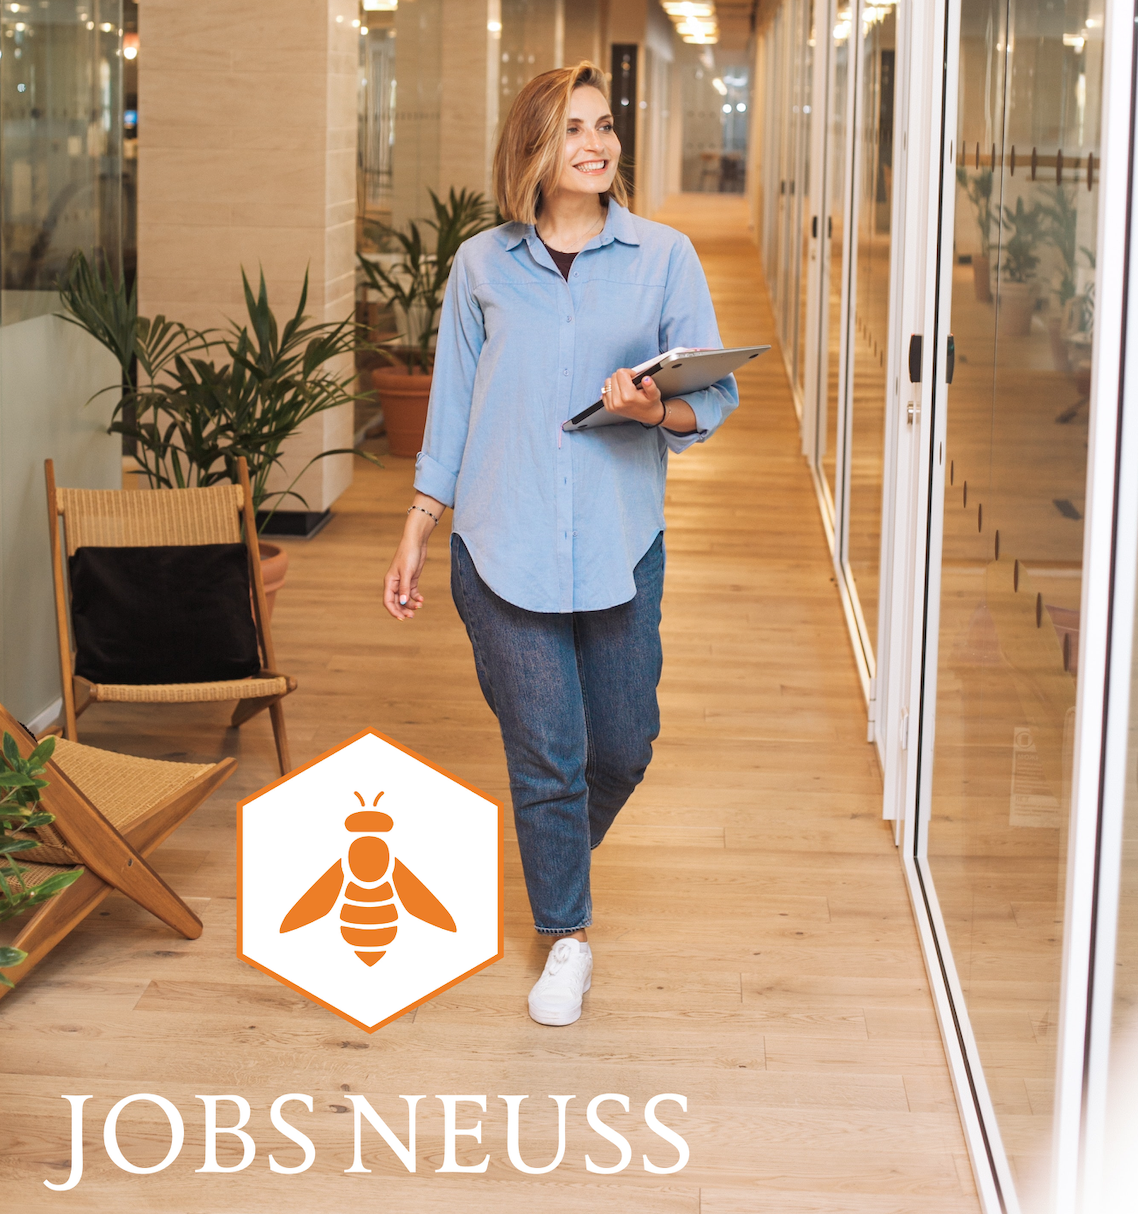 Featured image for “Jobs Neuss – Job suchen & bewerben!”